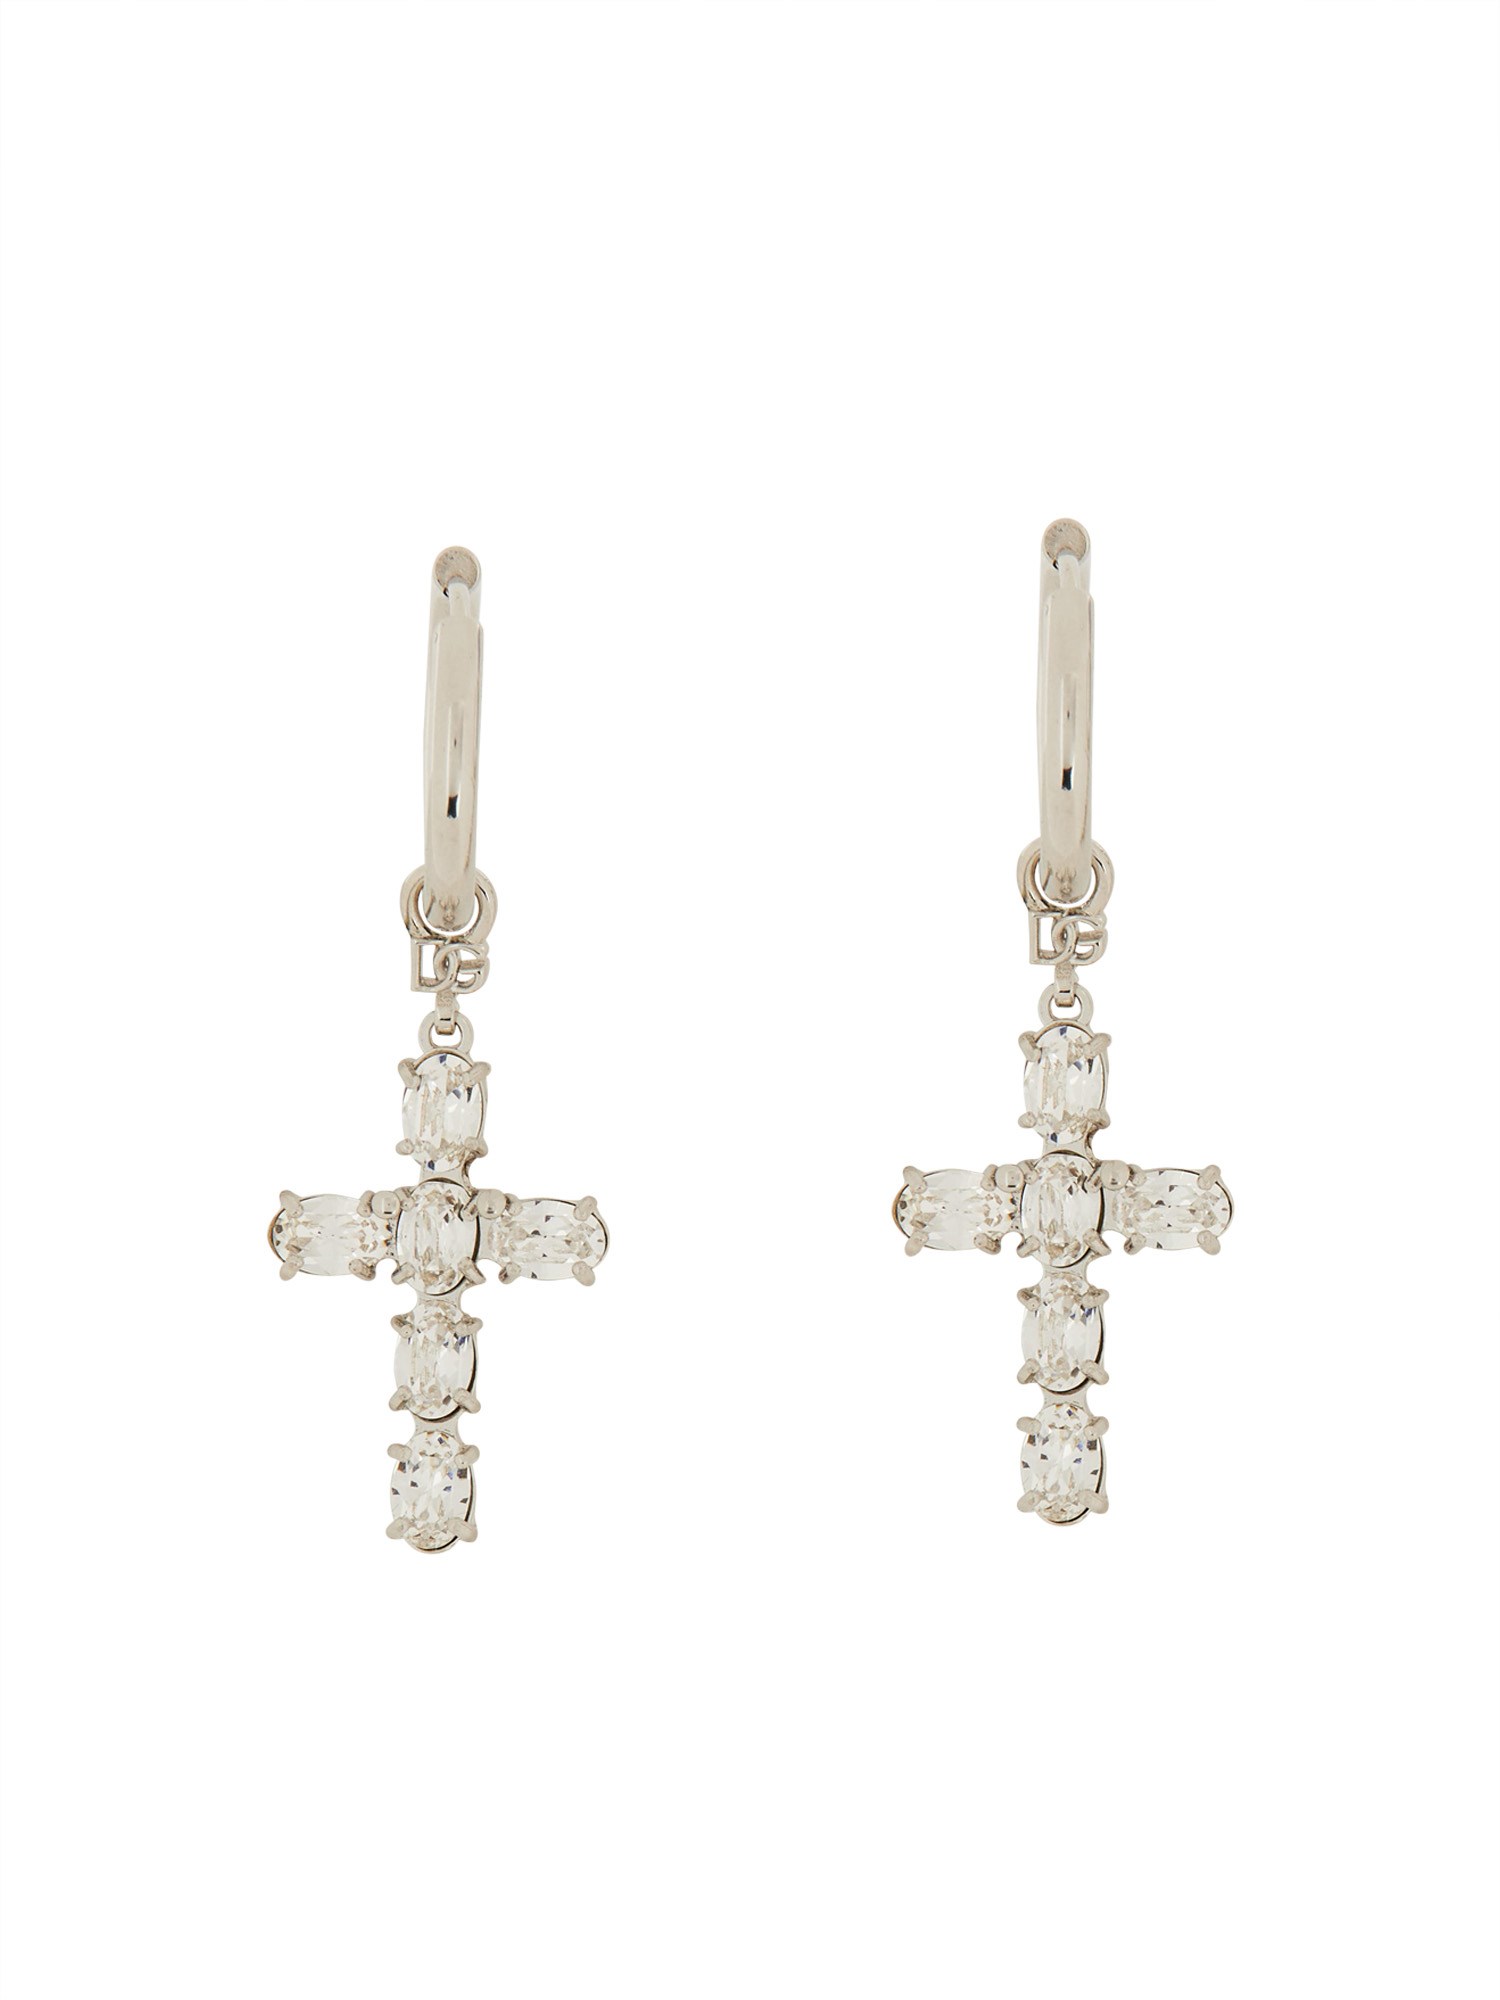 dolce & gabbana earrings with crosses